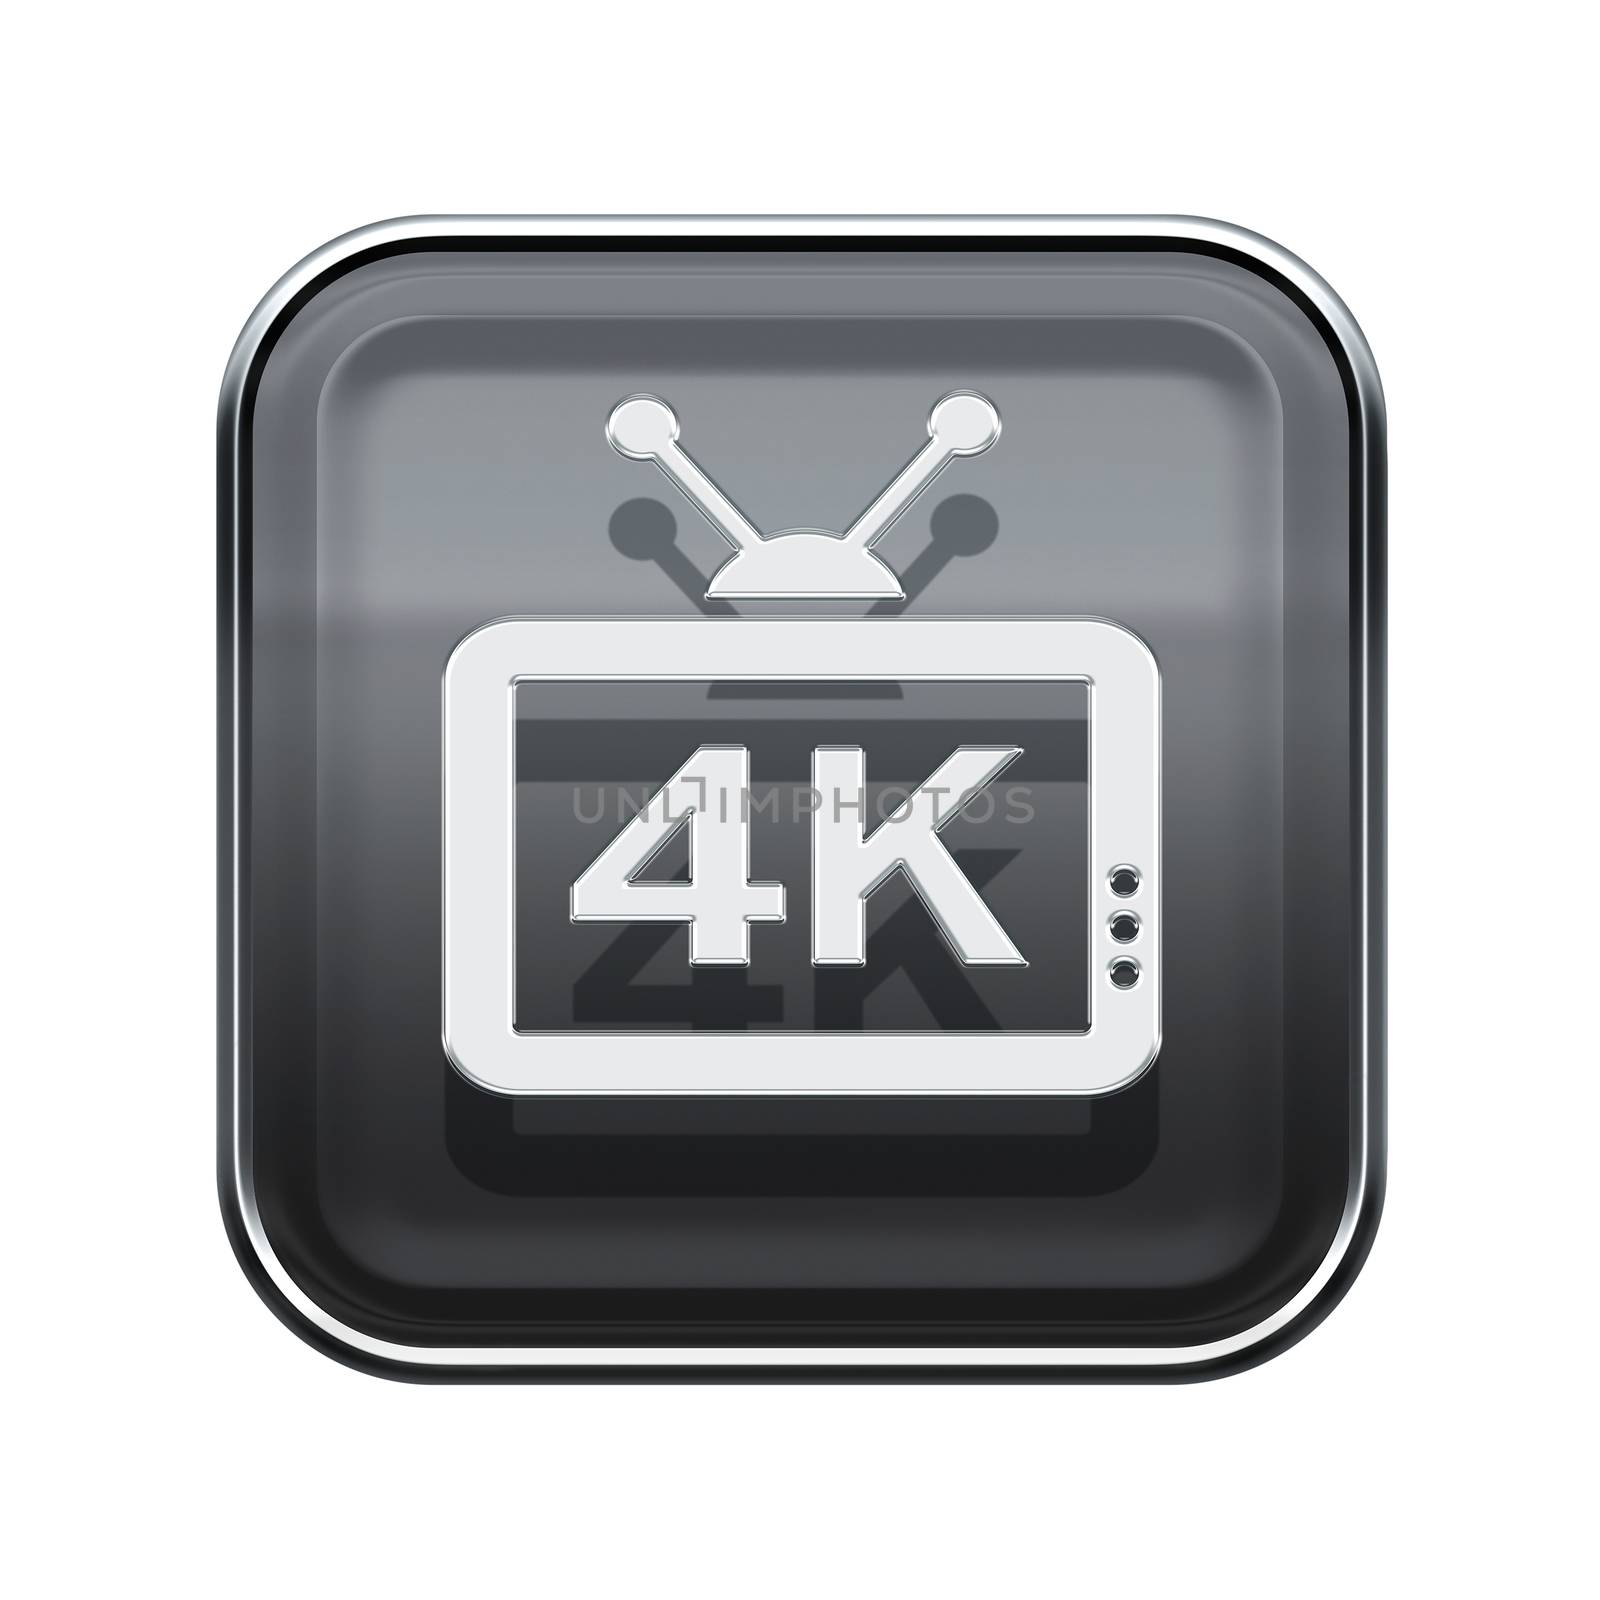 4K icon glossy grey, isolated on white background